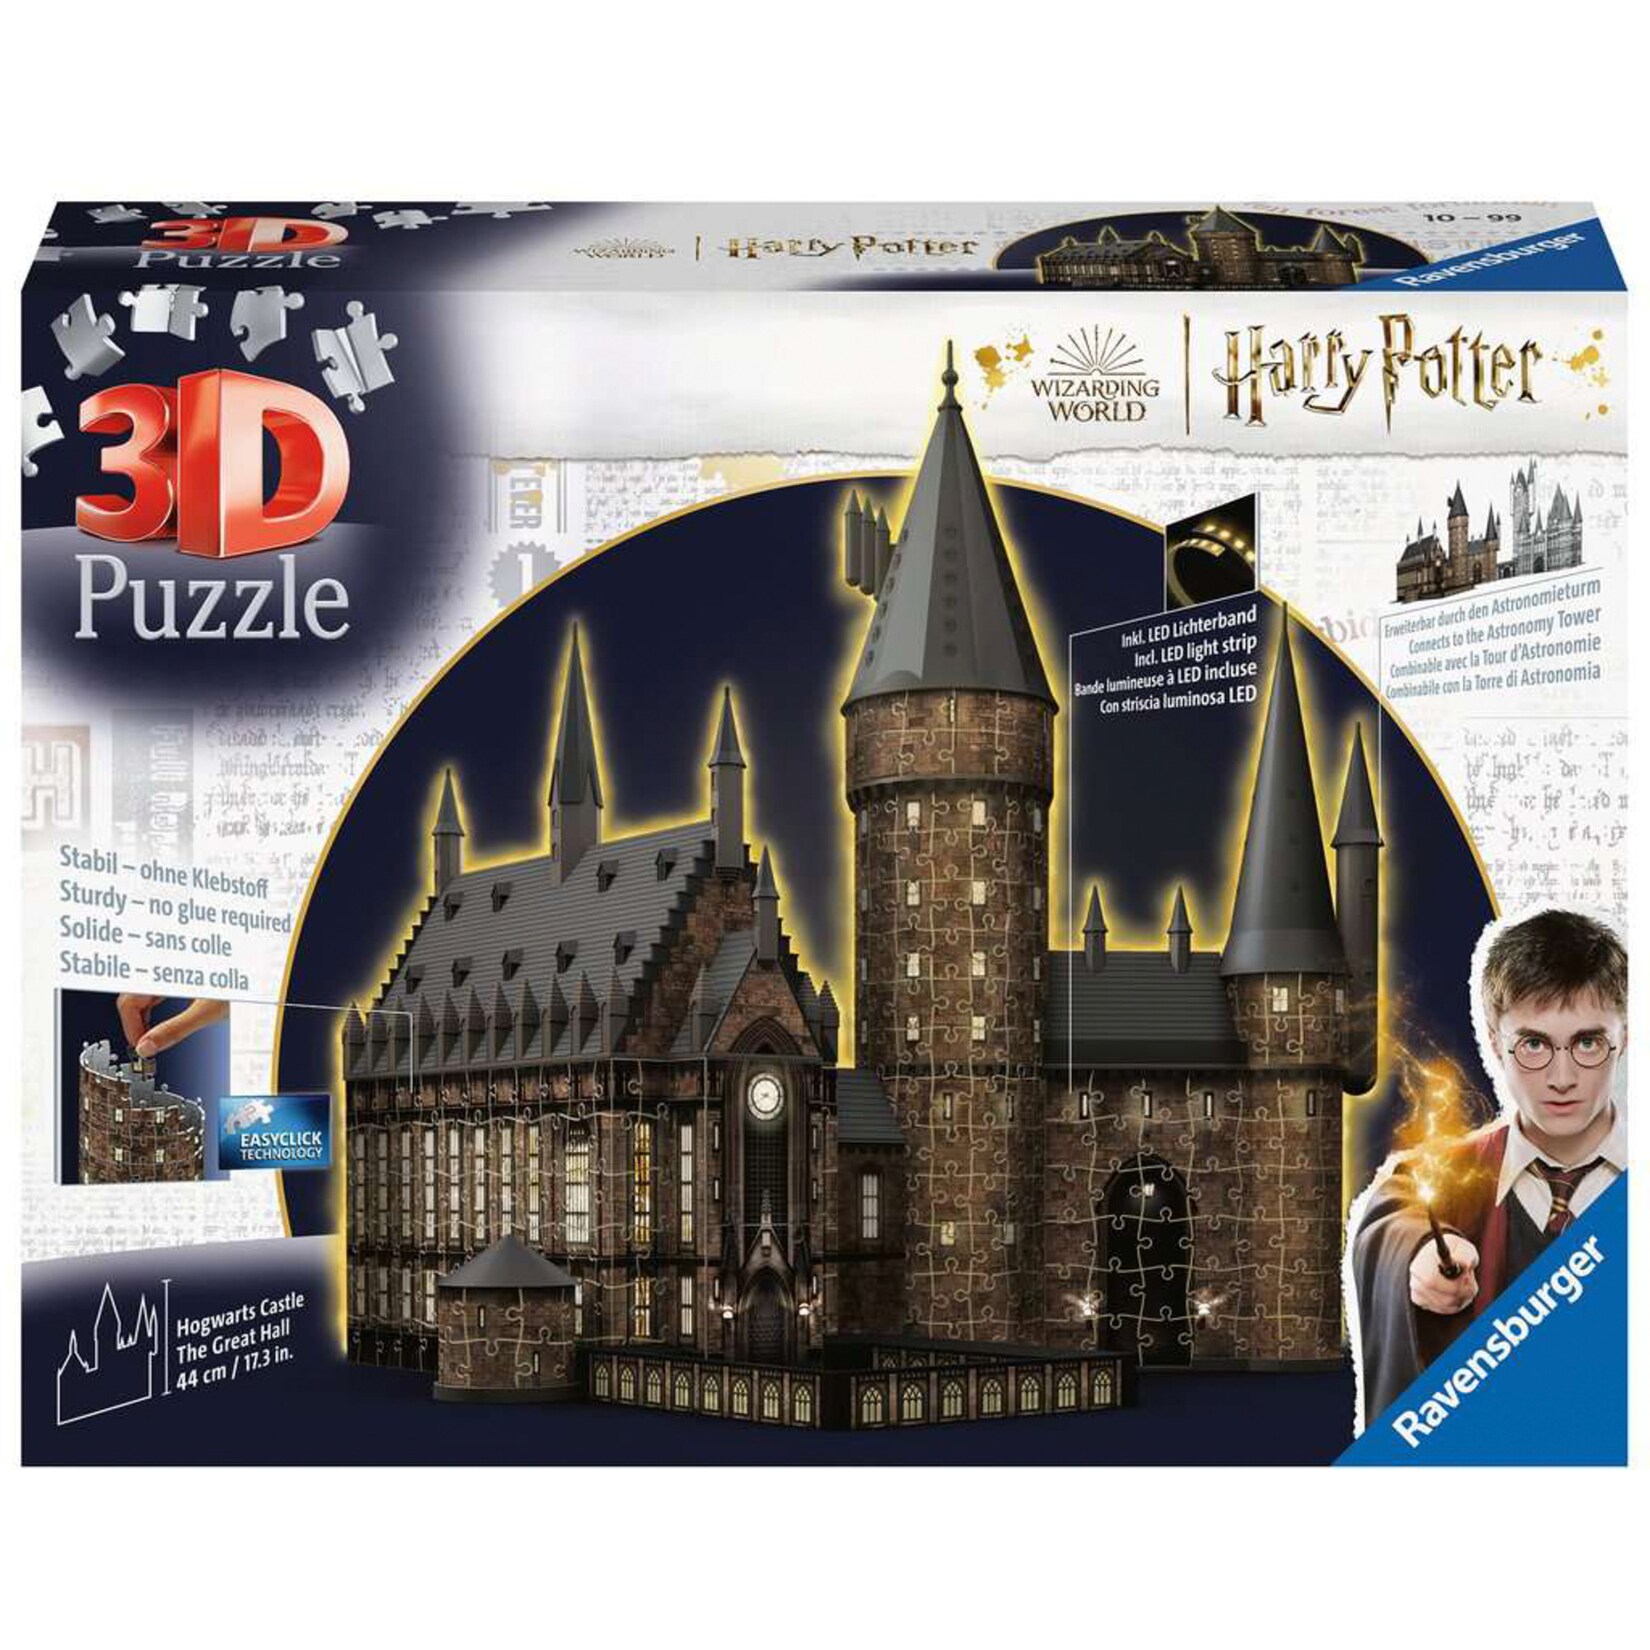 Ravensburger Puzzle 3D Puzzle Hogwarts Schloss - Die Große Halle Night Edition